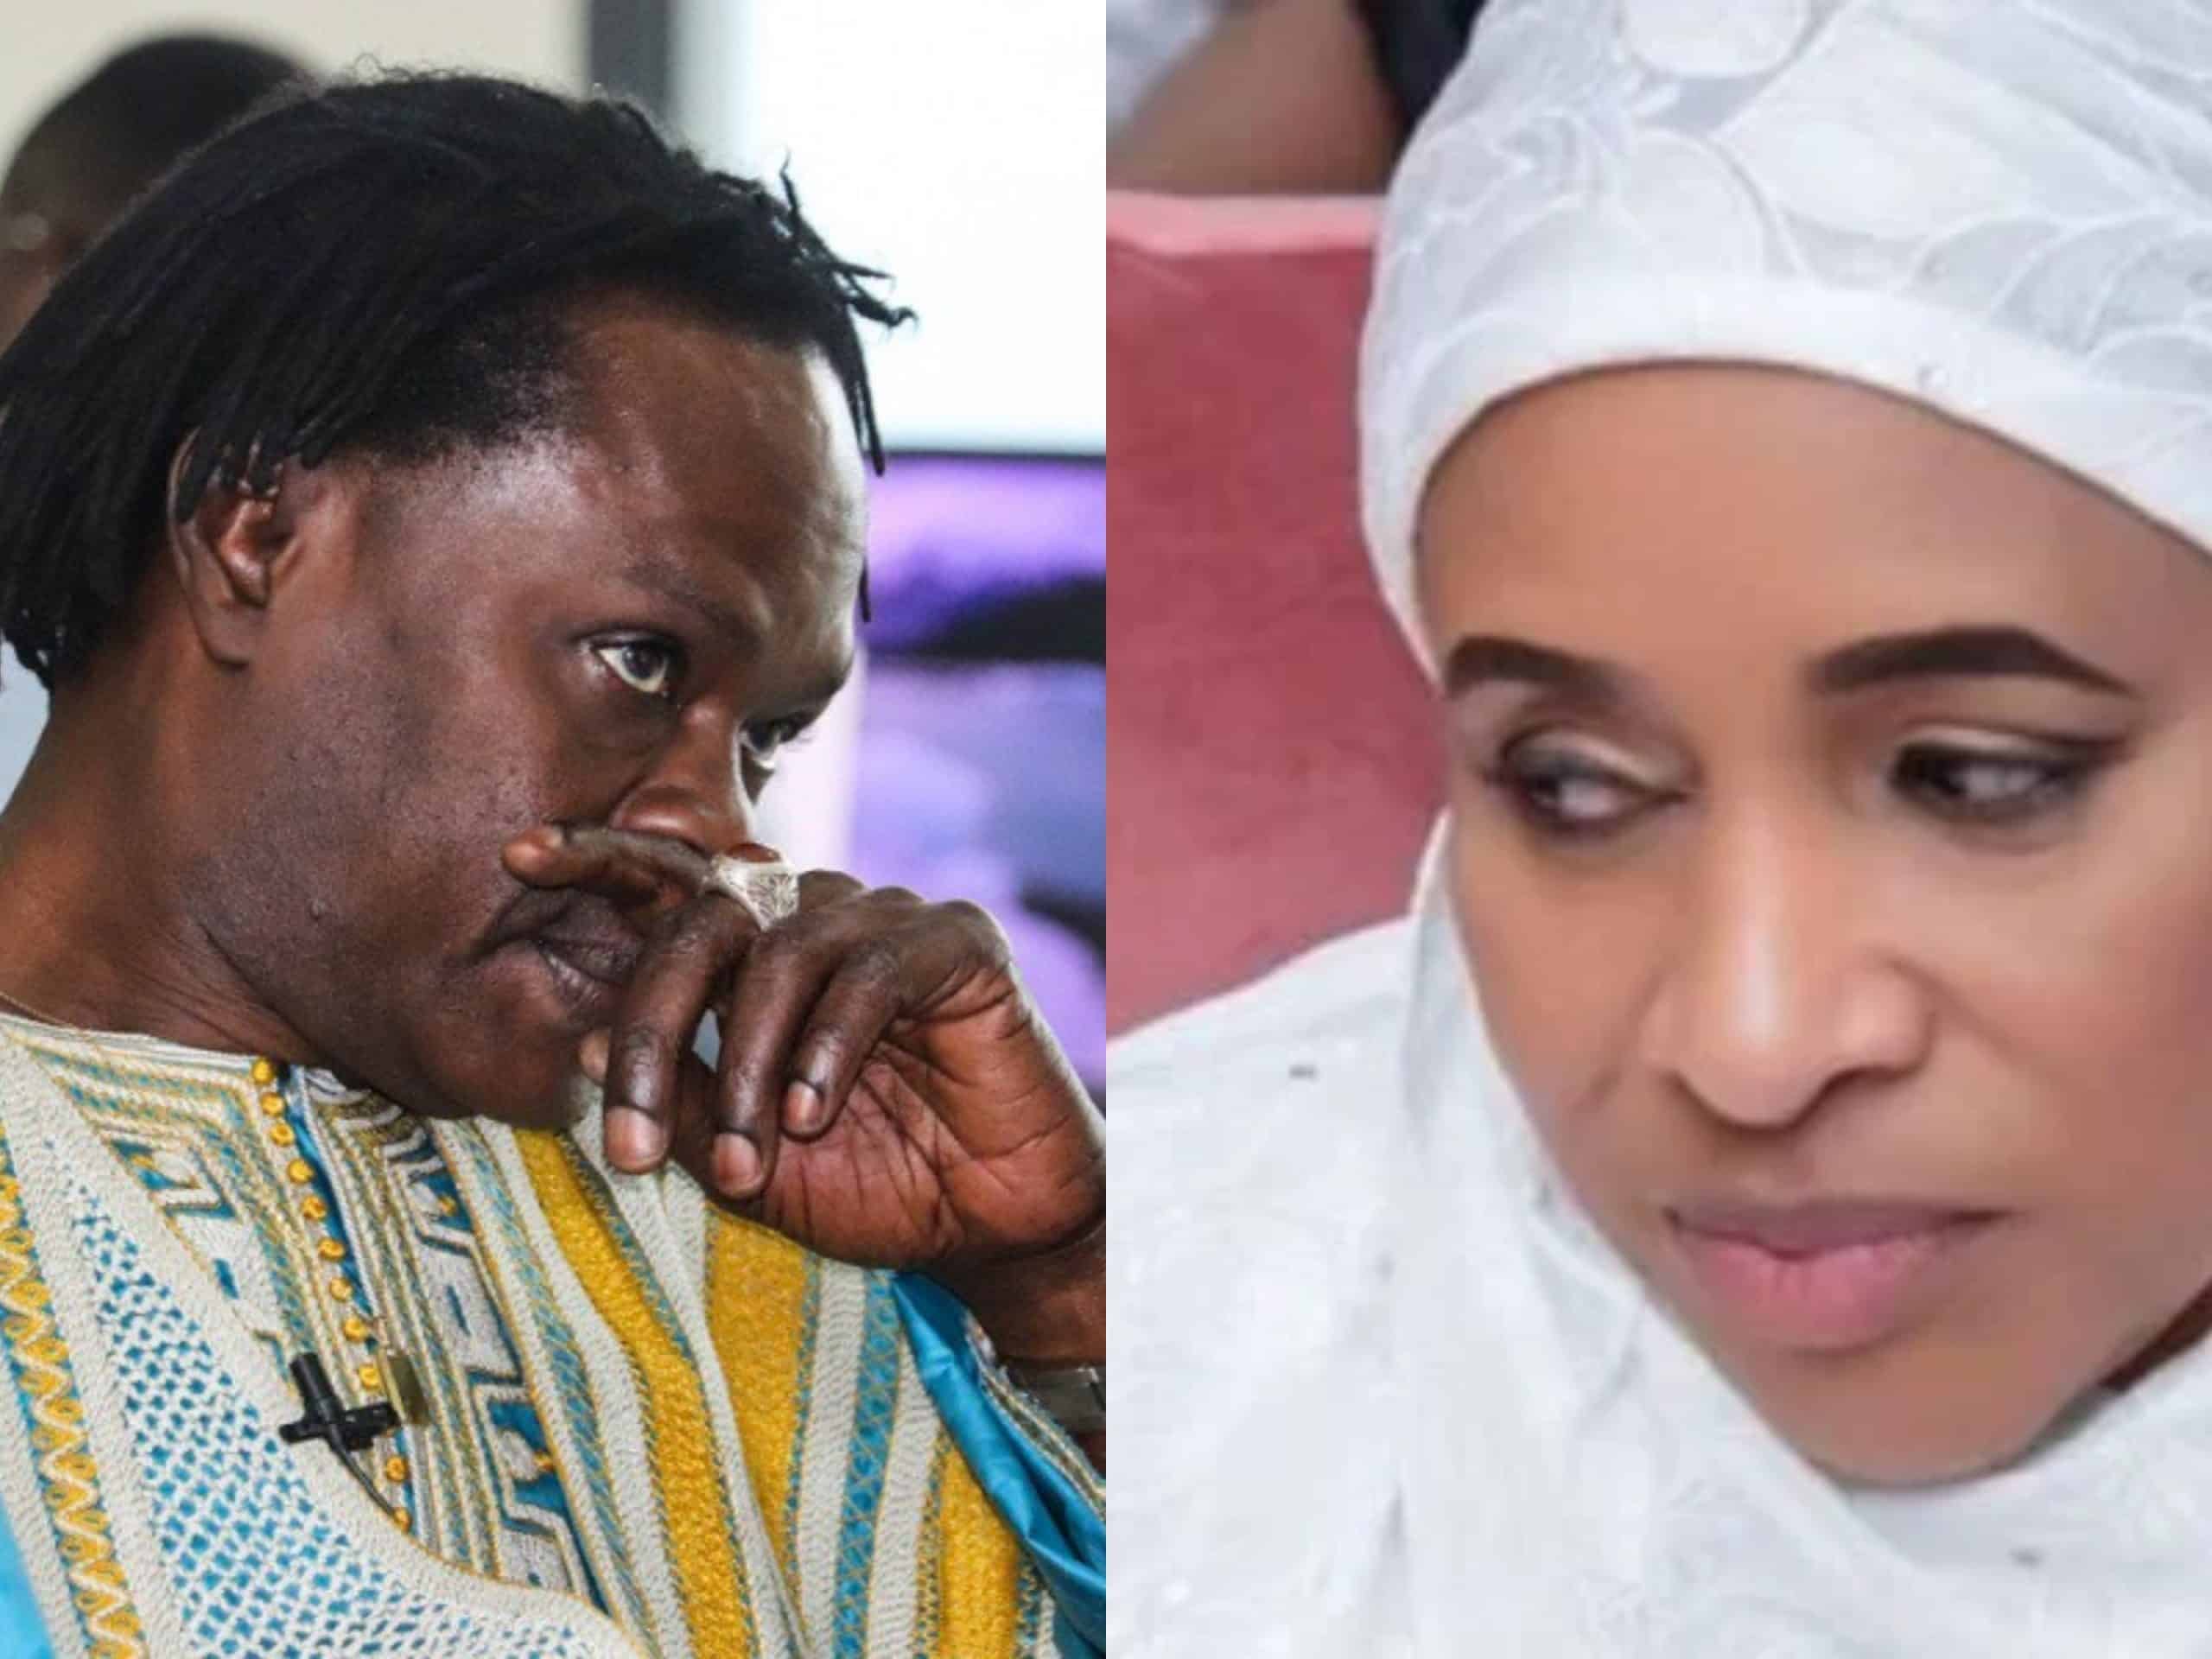 Décès de Ndeye Fatou Diouf "Diaga" : La réaction de Baaba Maal